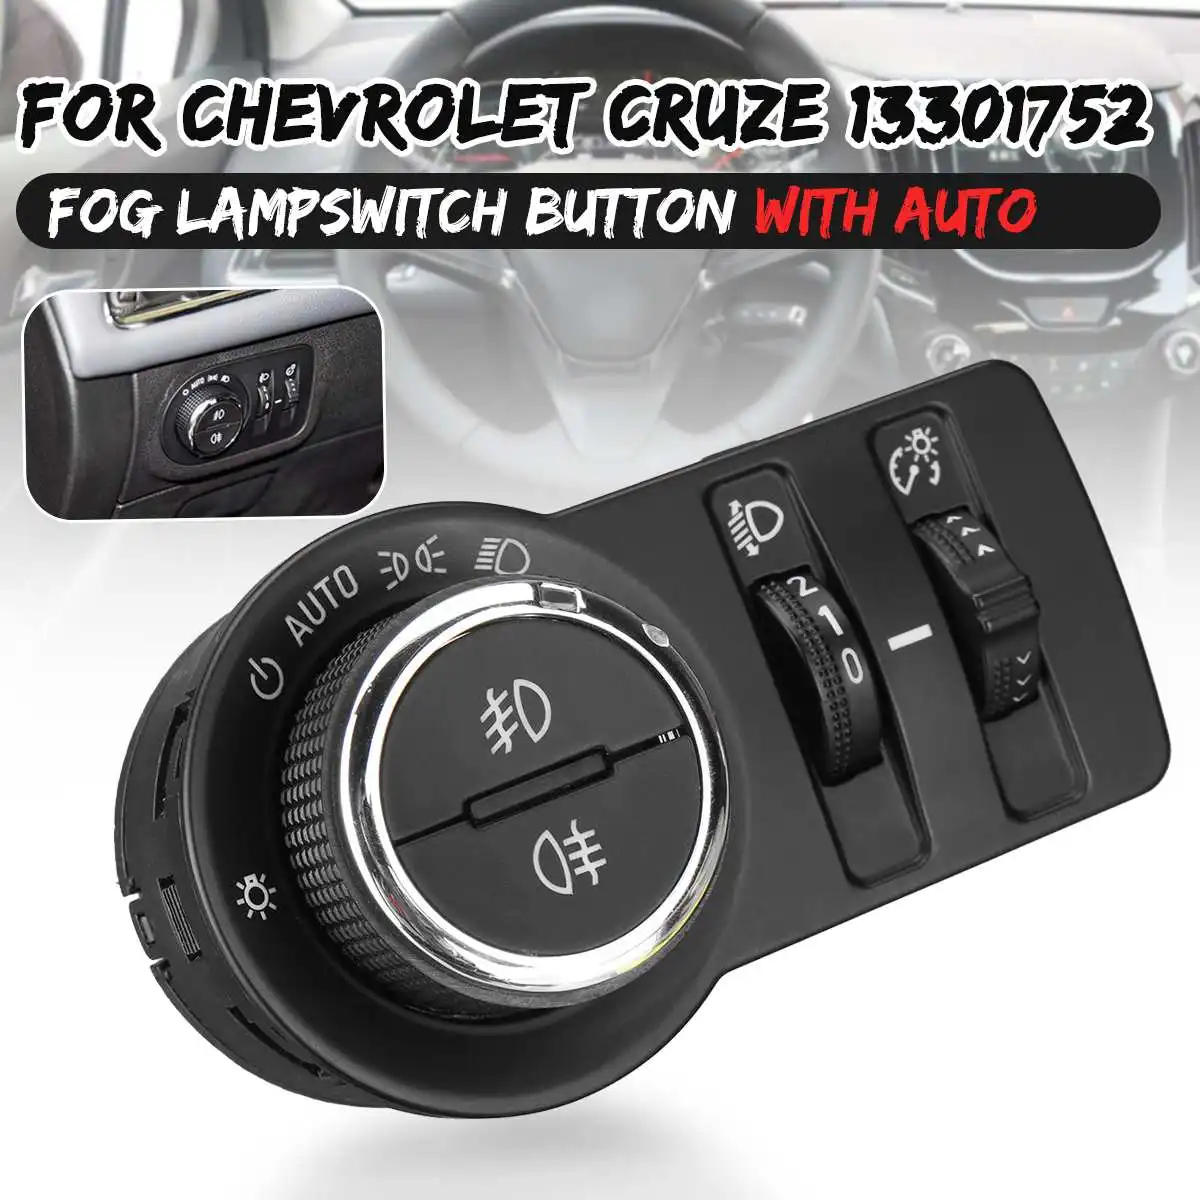 

Car Fog Lamp Headlight Switch Button AUTO 13301752 GM13301749 13301749 For Chevrolet Cruze Malibu J300 Chevy for Opel Astra J